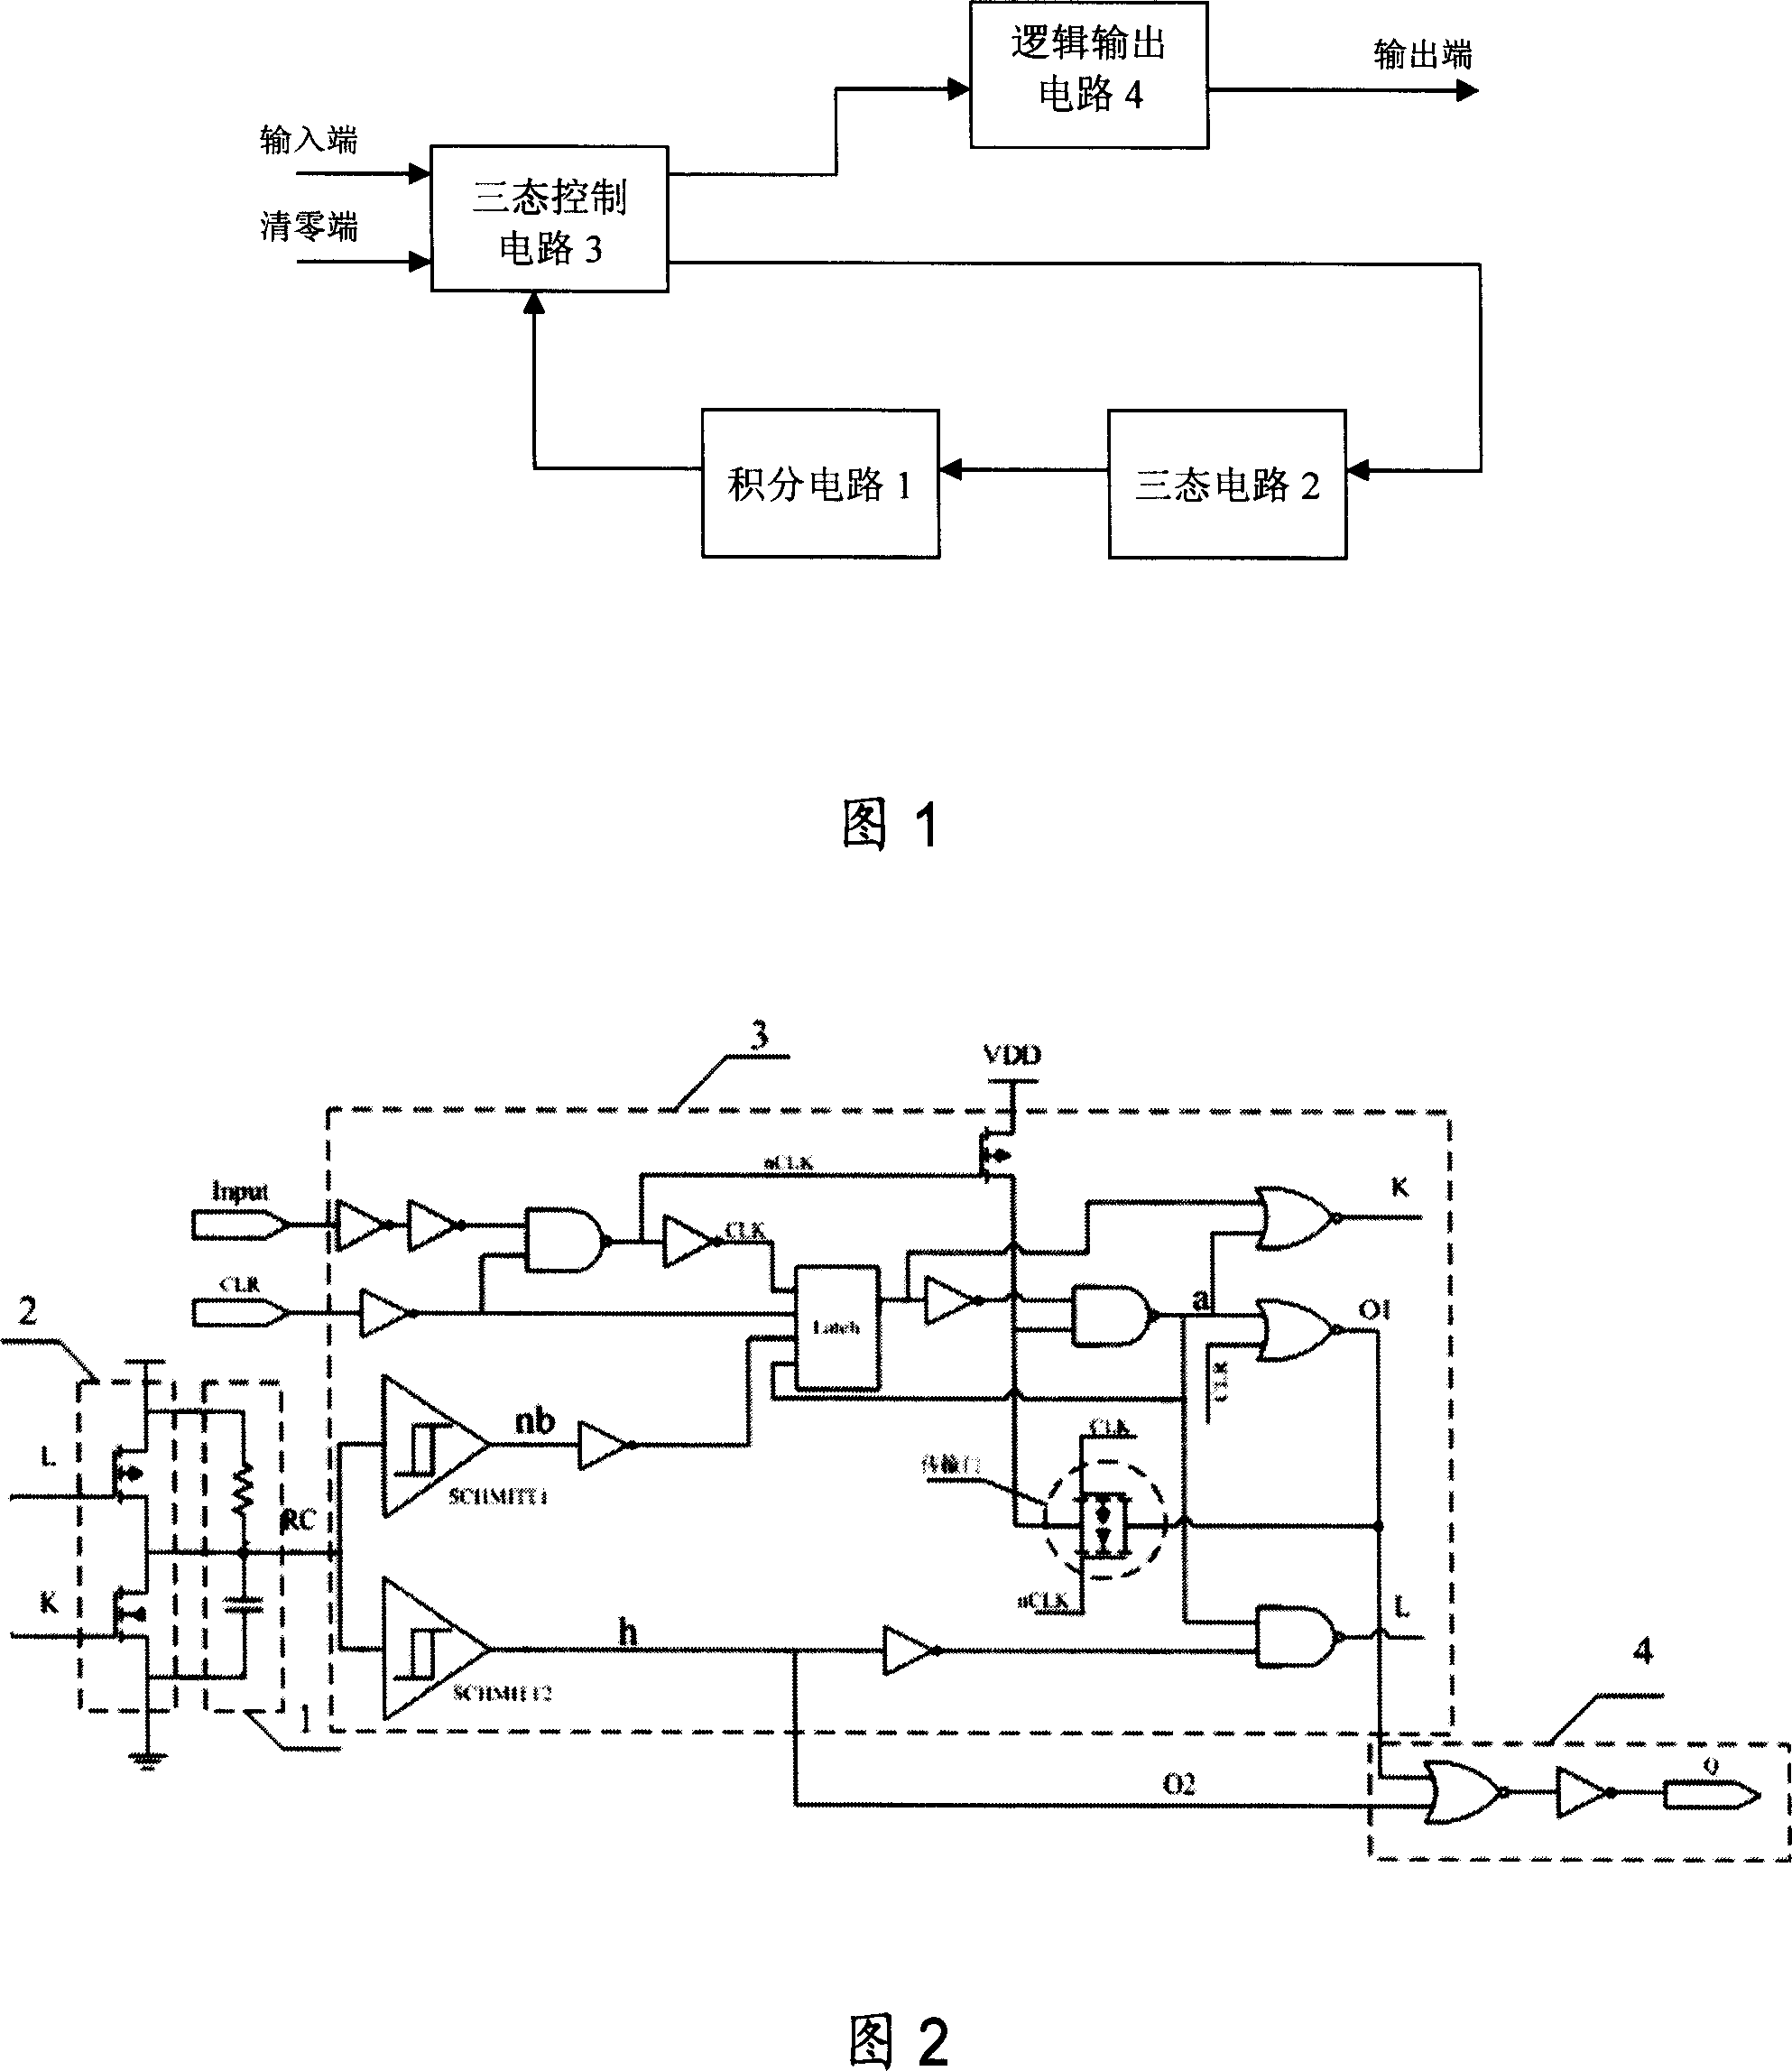 CMOS single stabilization circuit